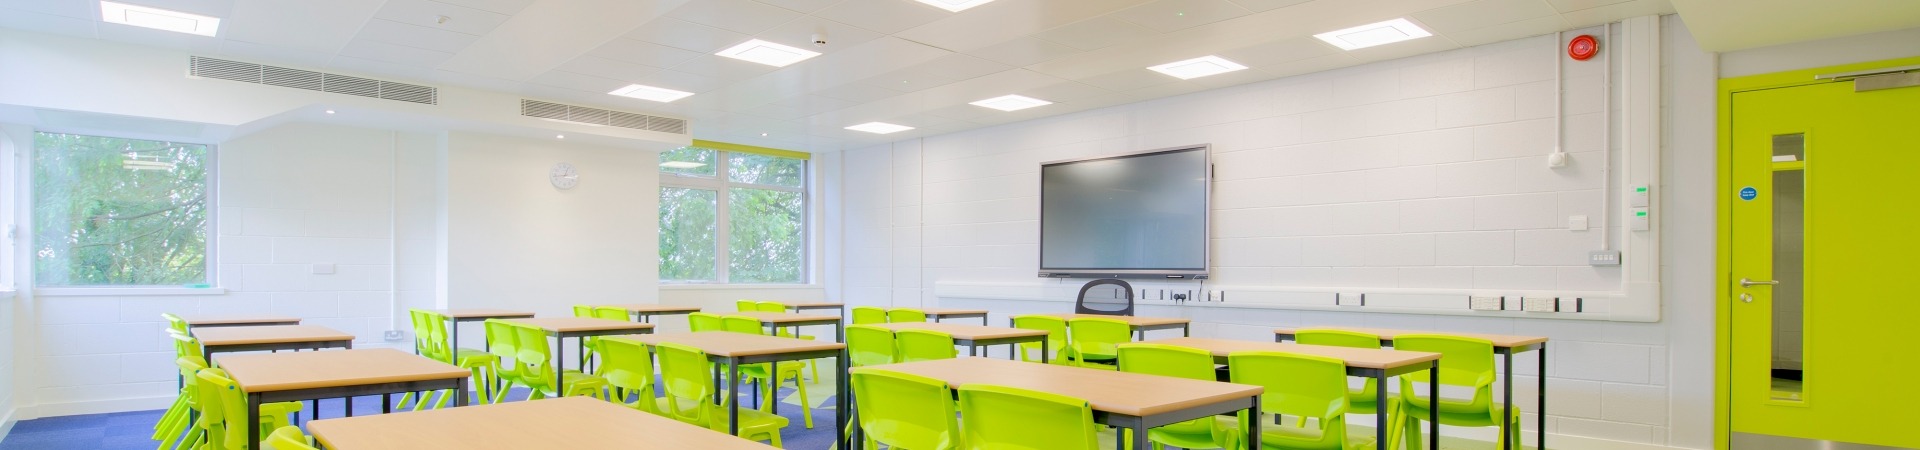 Tamlite Thornleigh Salesian College Bolton Education LED Lighting Case Study classroom header